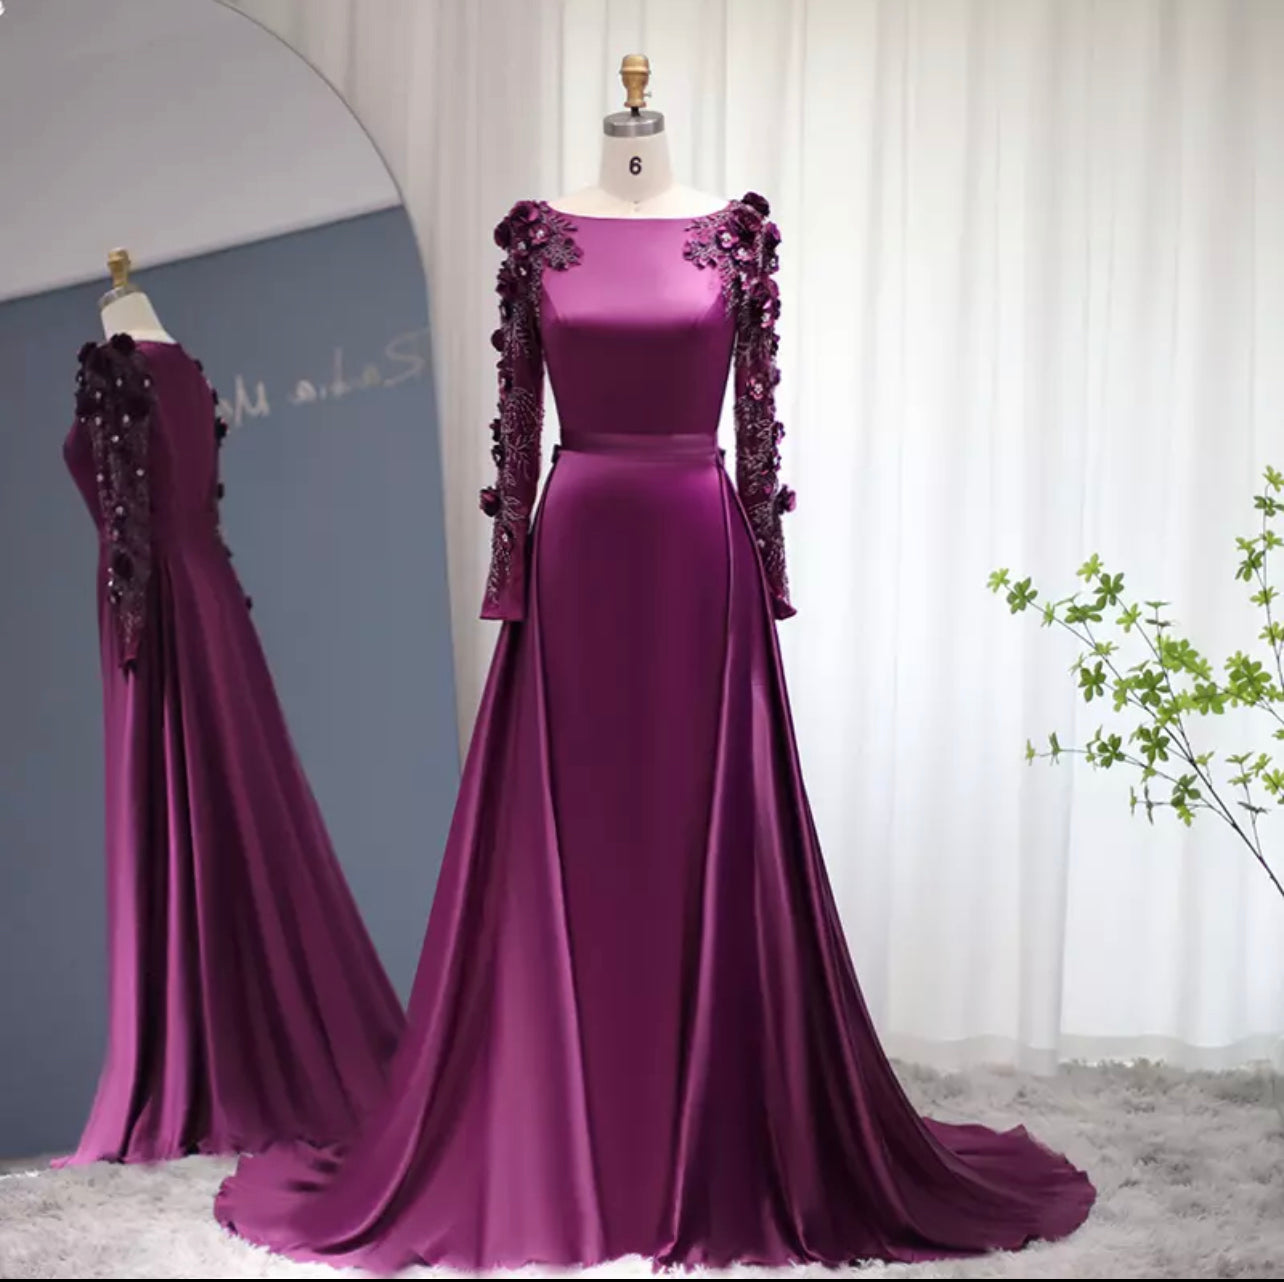 Luxury elegant gowns